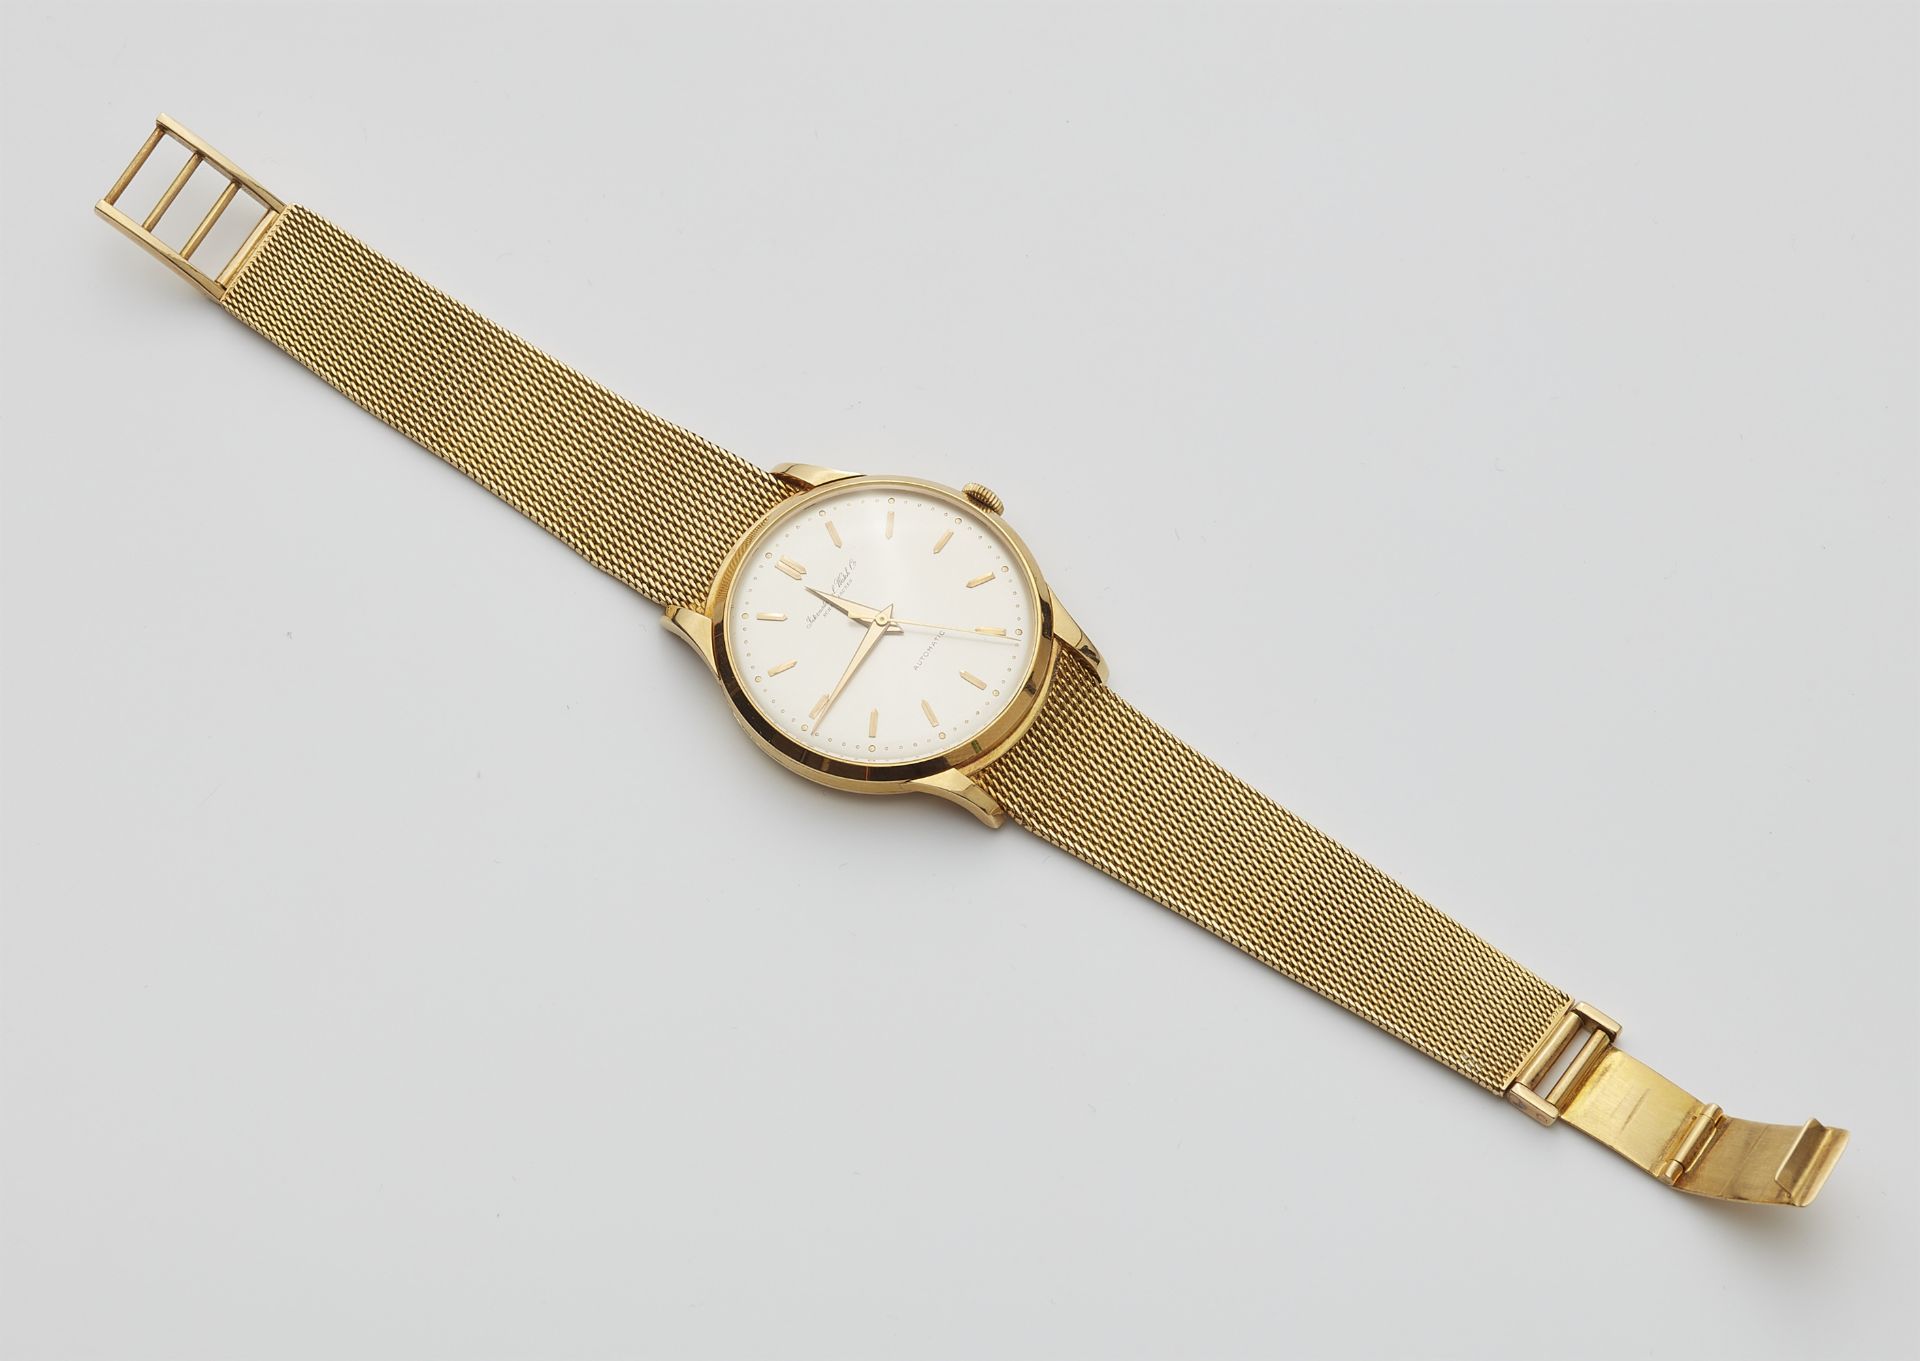 An 18k IWC automatic gentleman's wristwatch with a René Kern bracelet. - Image 2 of 3